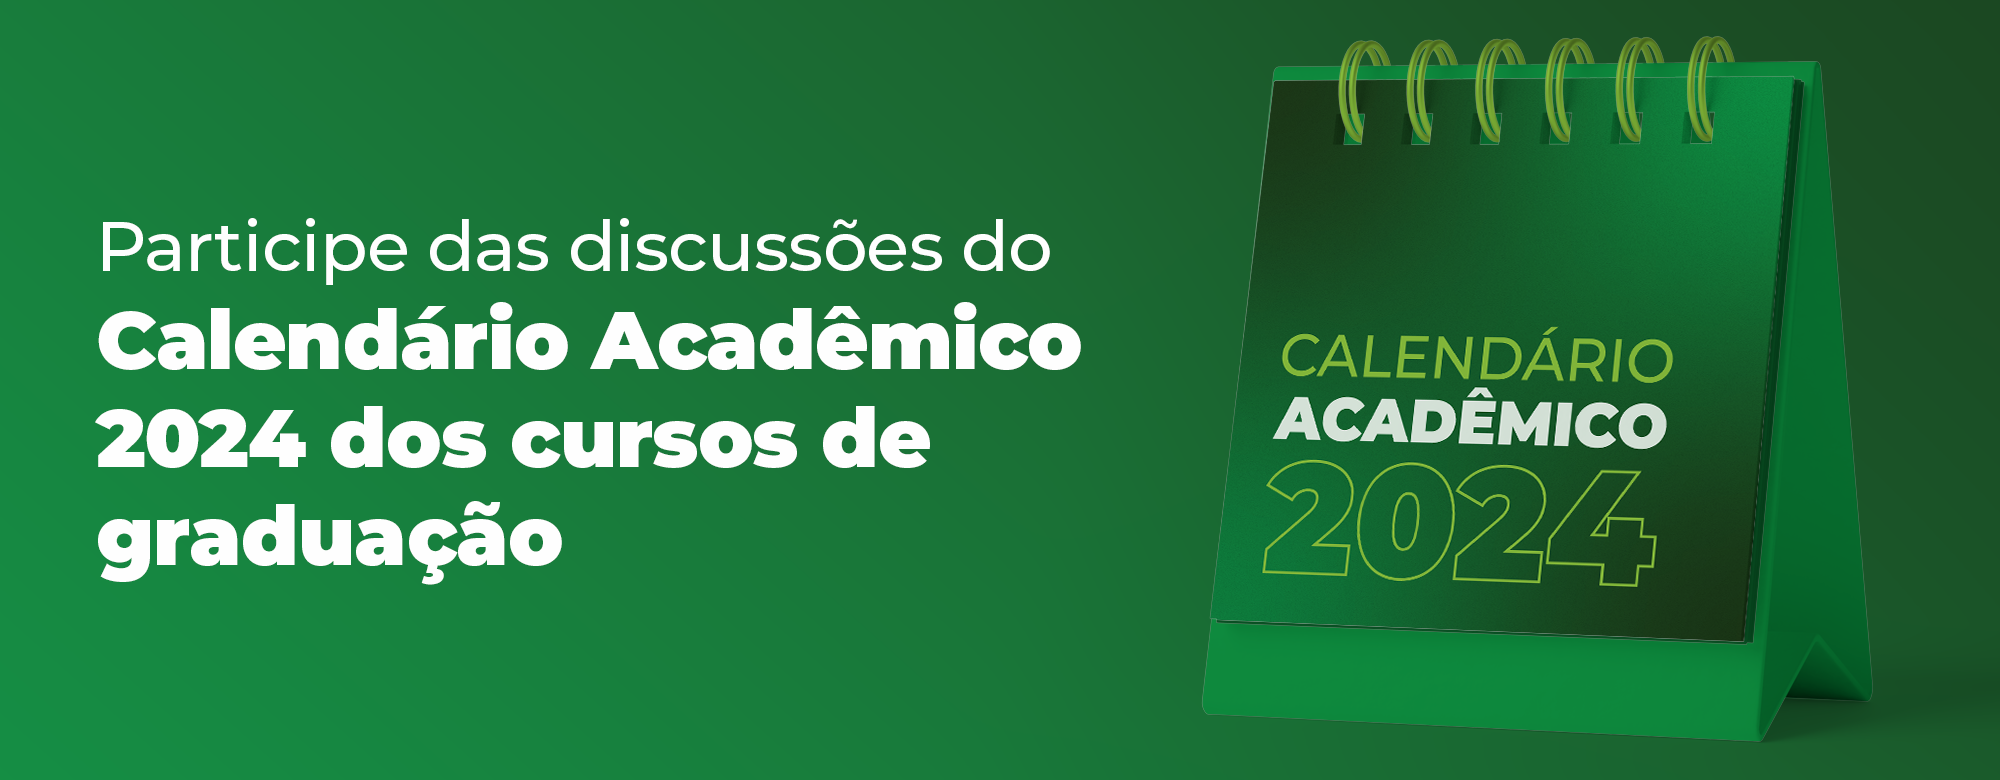 https://unipampa.edu.br/portal/calendario-academico-colaborativo-de-2024